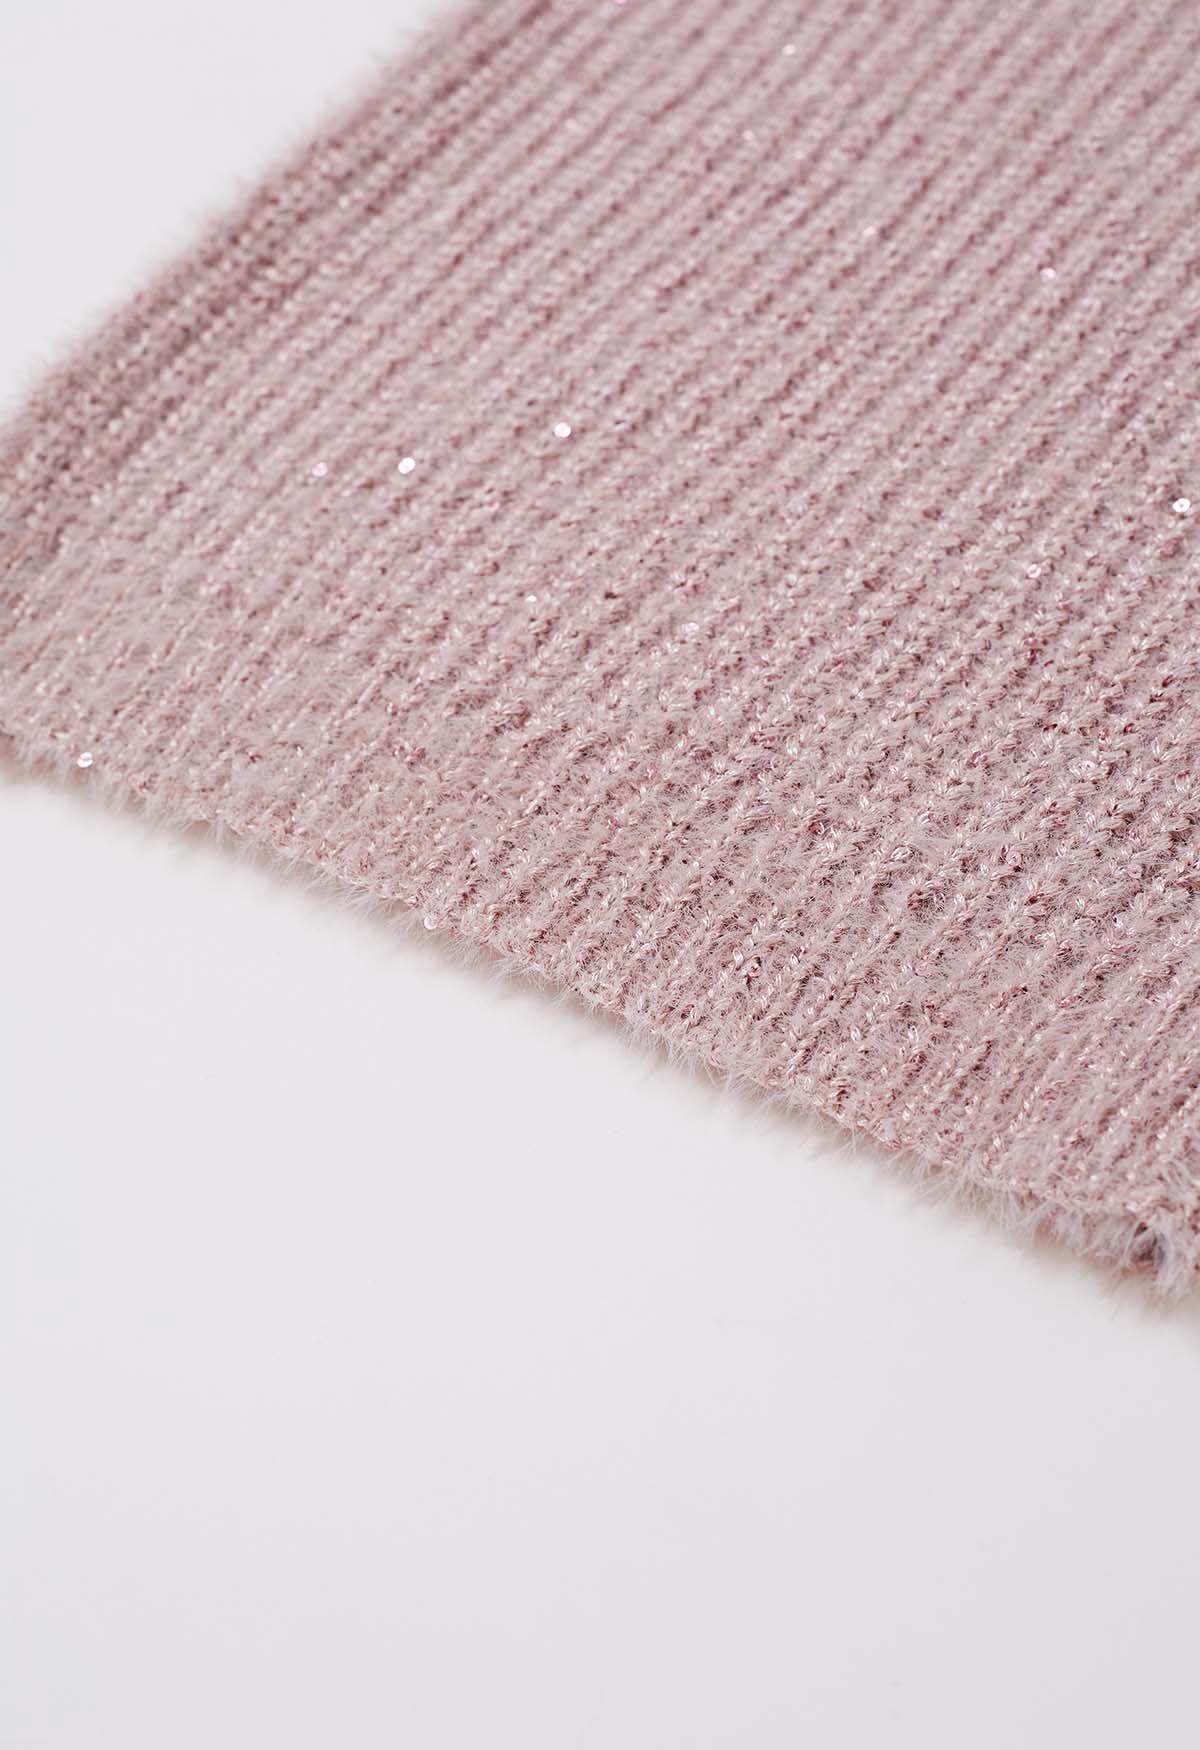 Sequin Fuzzy Short Sleeve Sweater in Pink